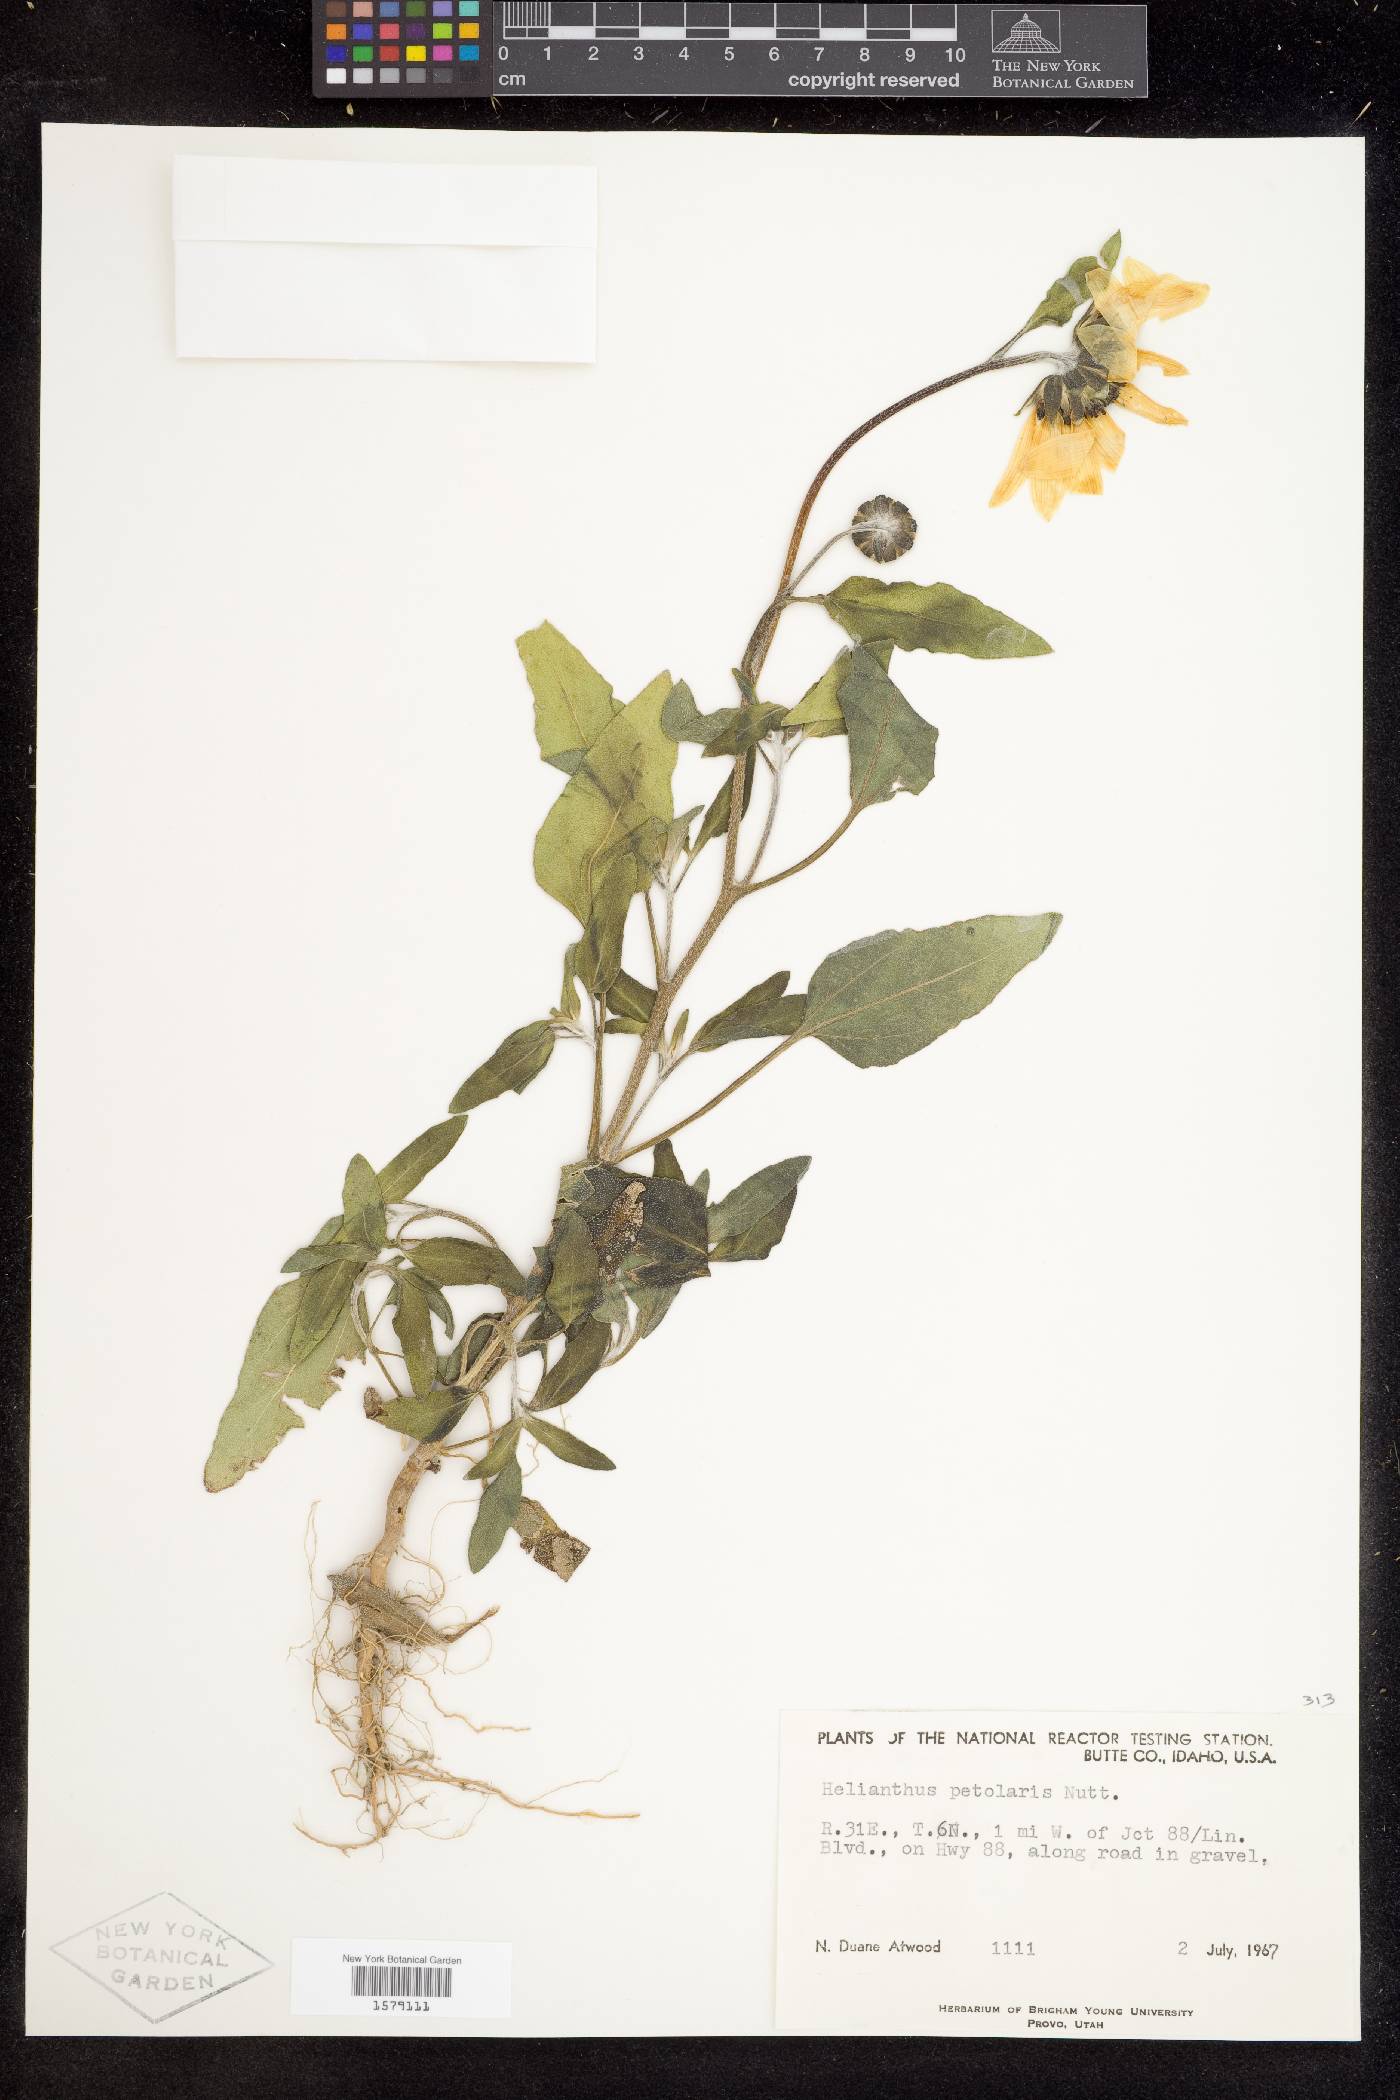 Helianthus petiolaris var. petiolaris image